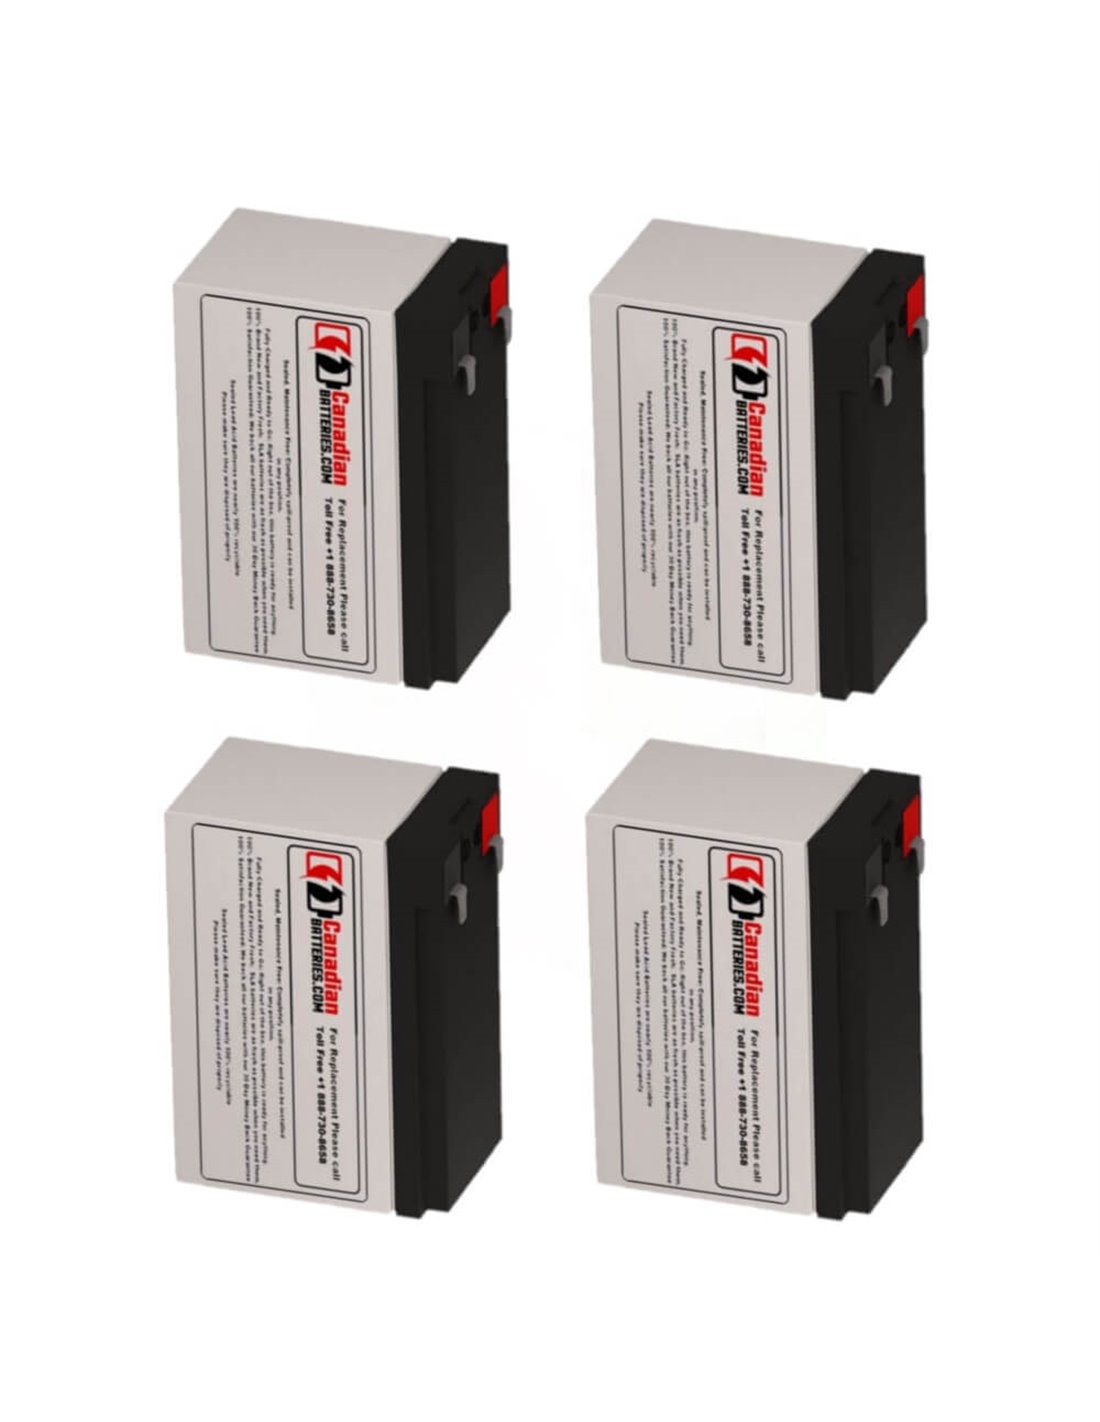 Batteries for Best Technologies Btg-0303 UPS, 4 x 12V, 7Ah - 84Wh